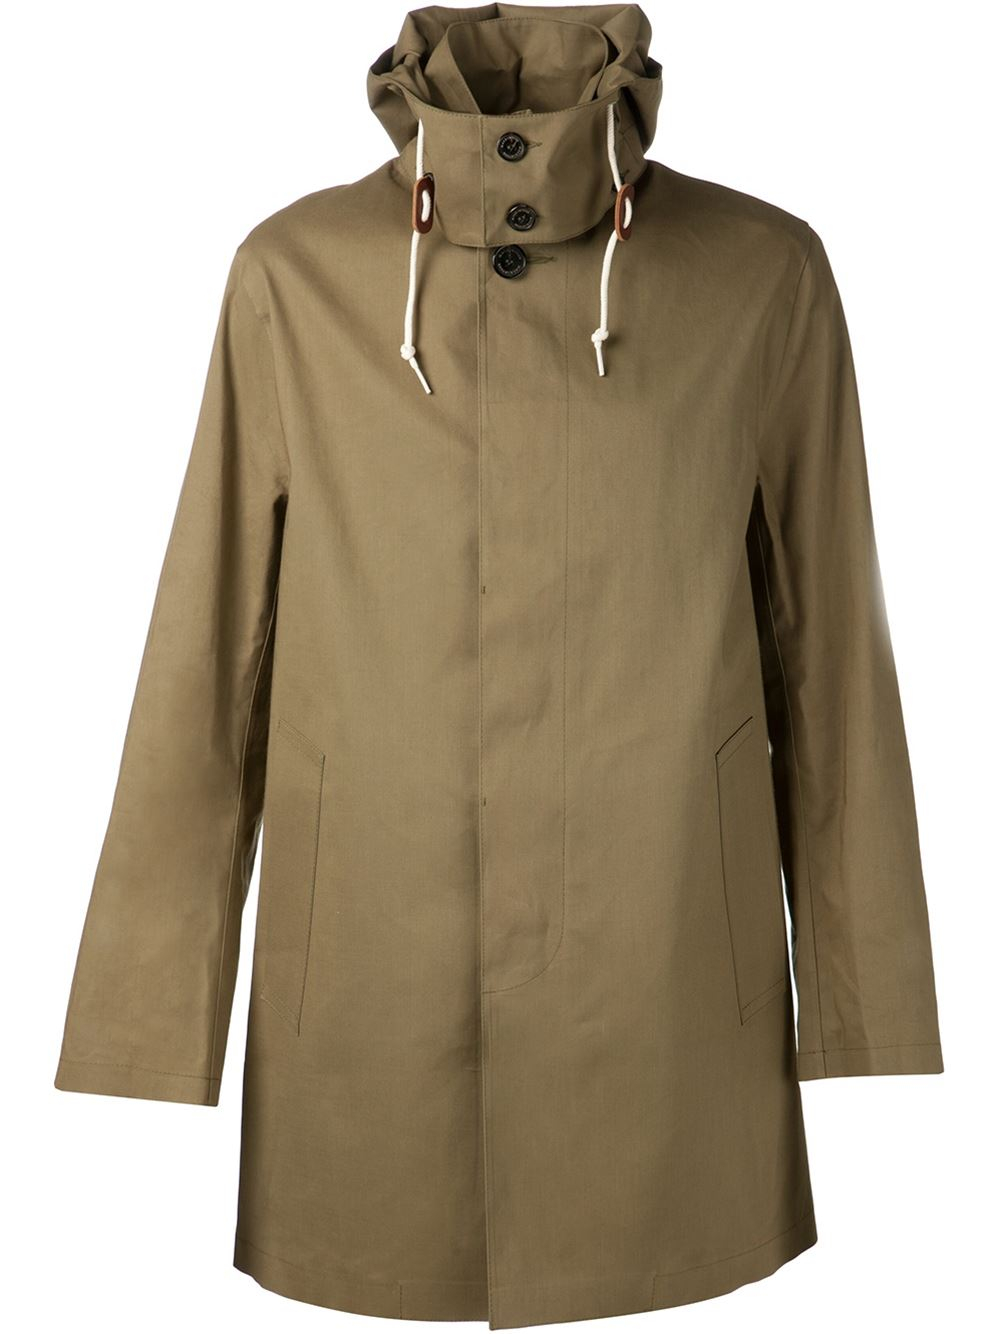 Lyst - Mackintosh 'Dunoon' Raincoat in Green for Men